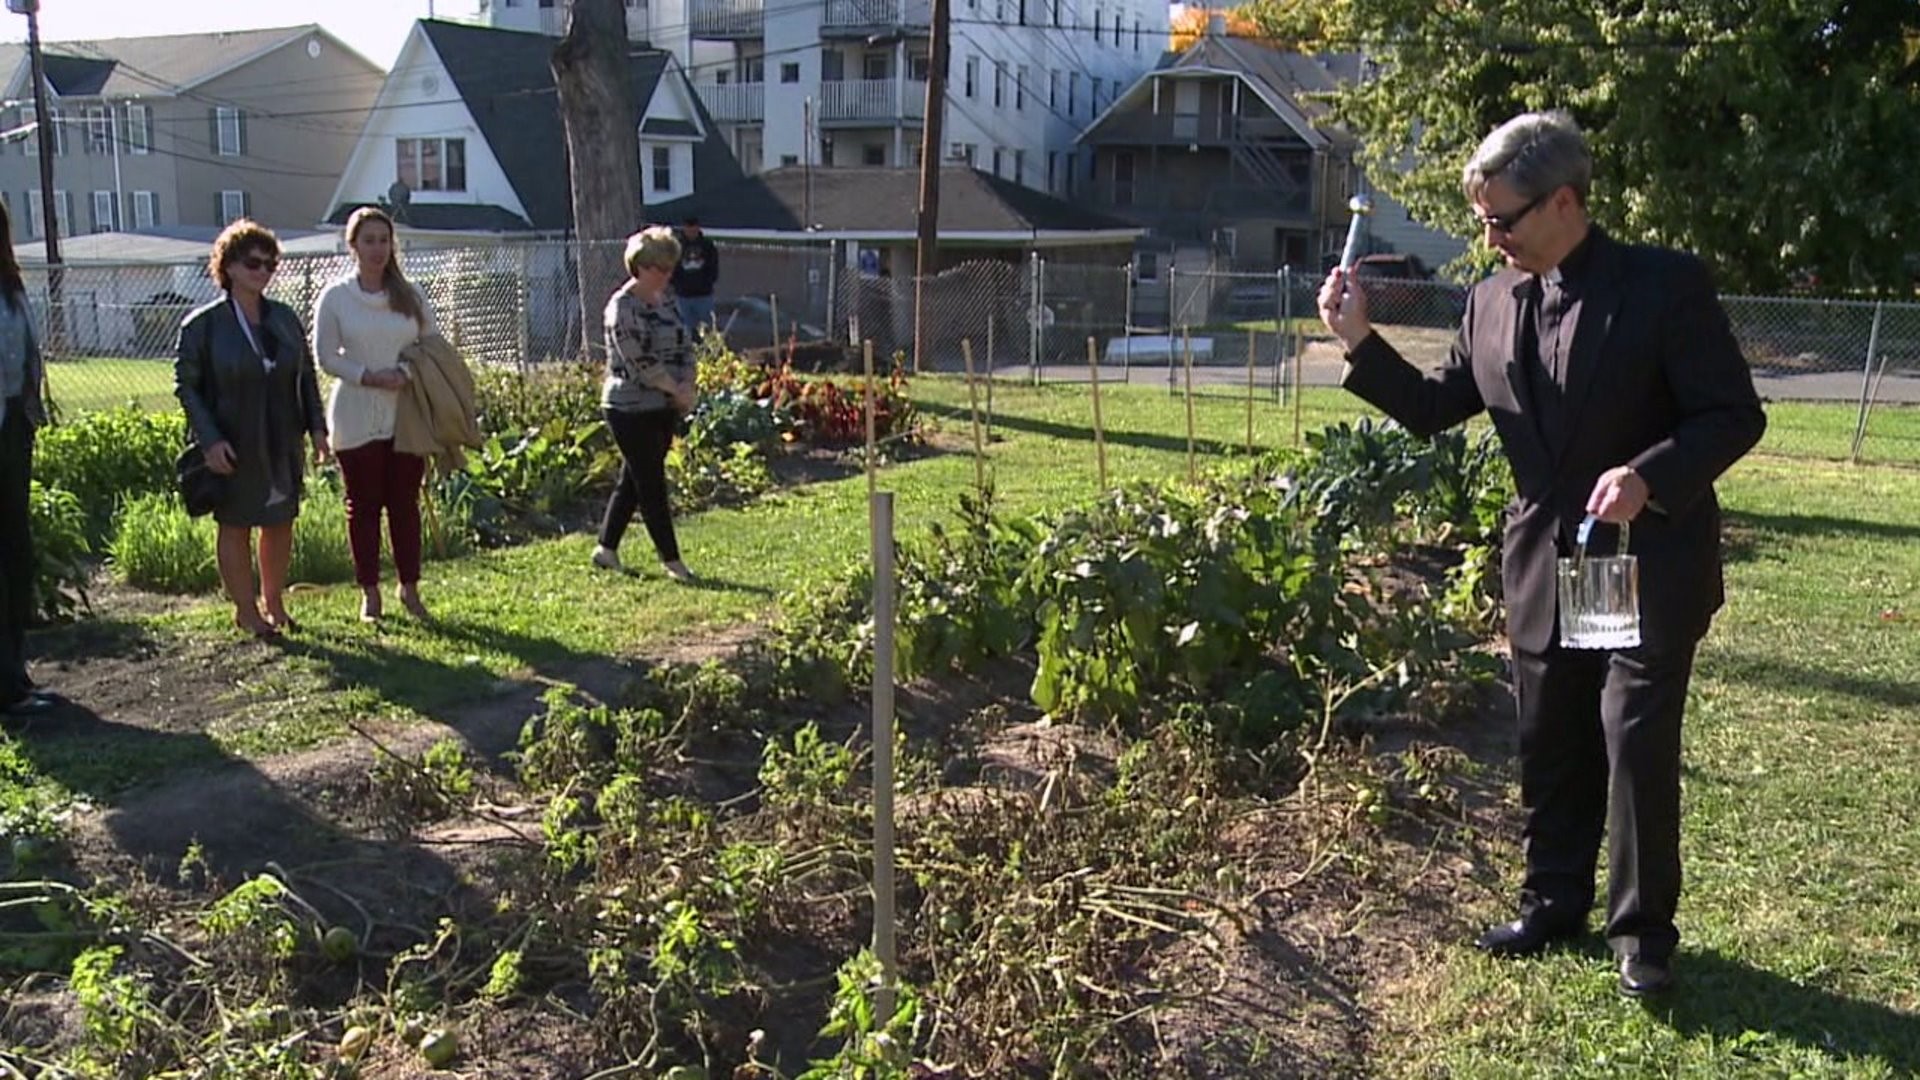 University of Scranton Dedicates New Community Garden